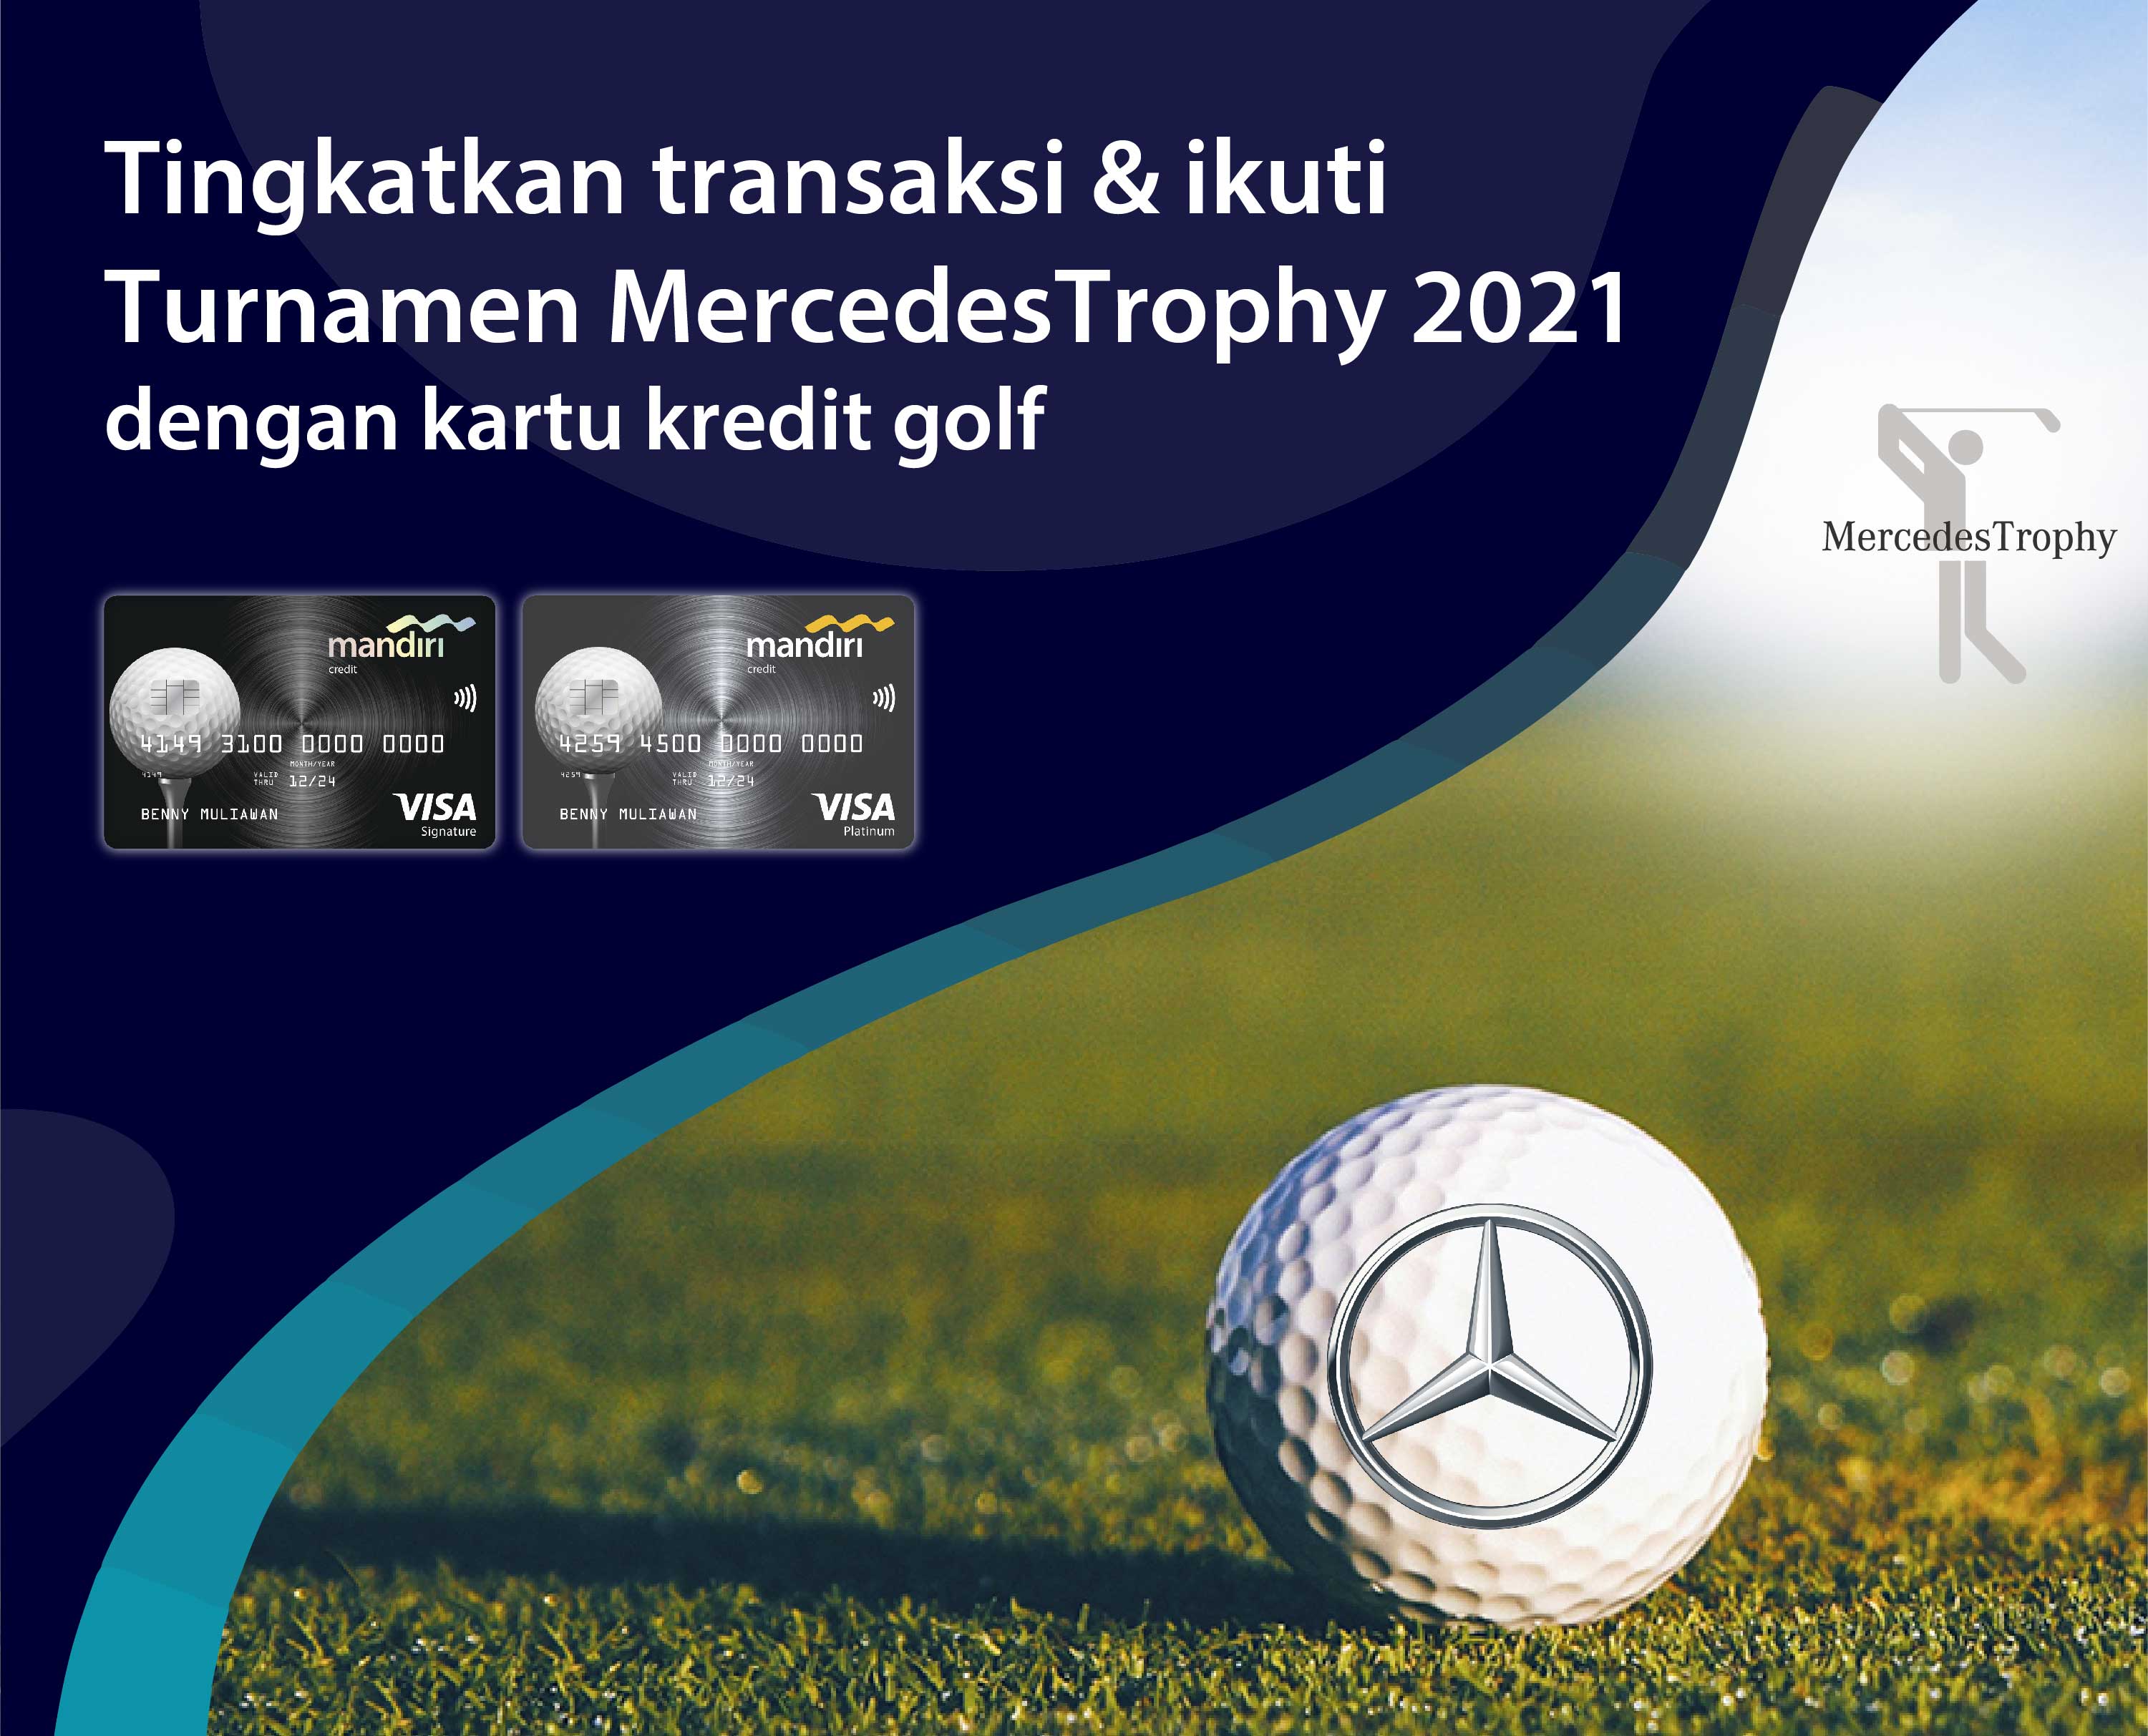 Program Penawaran Turnament Mercedez Trophy Indonesia 2021 ...